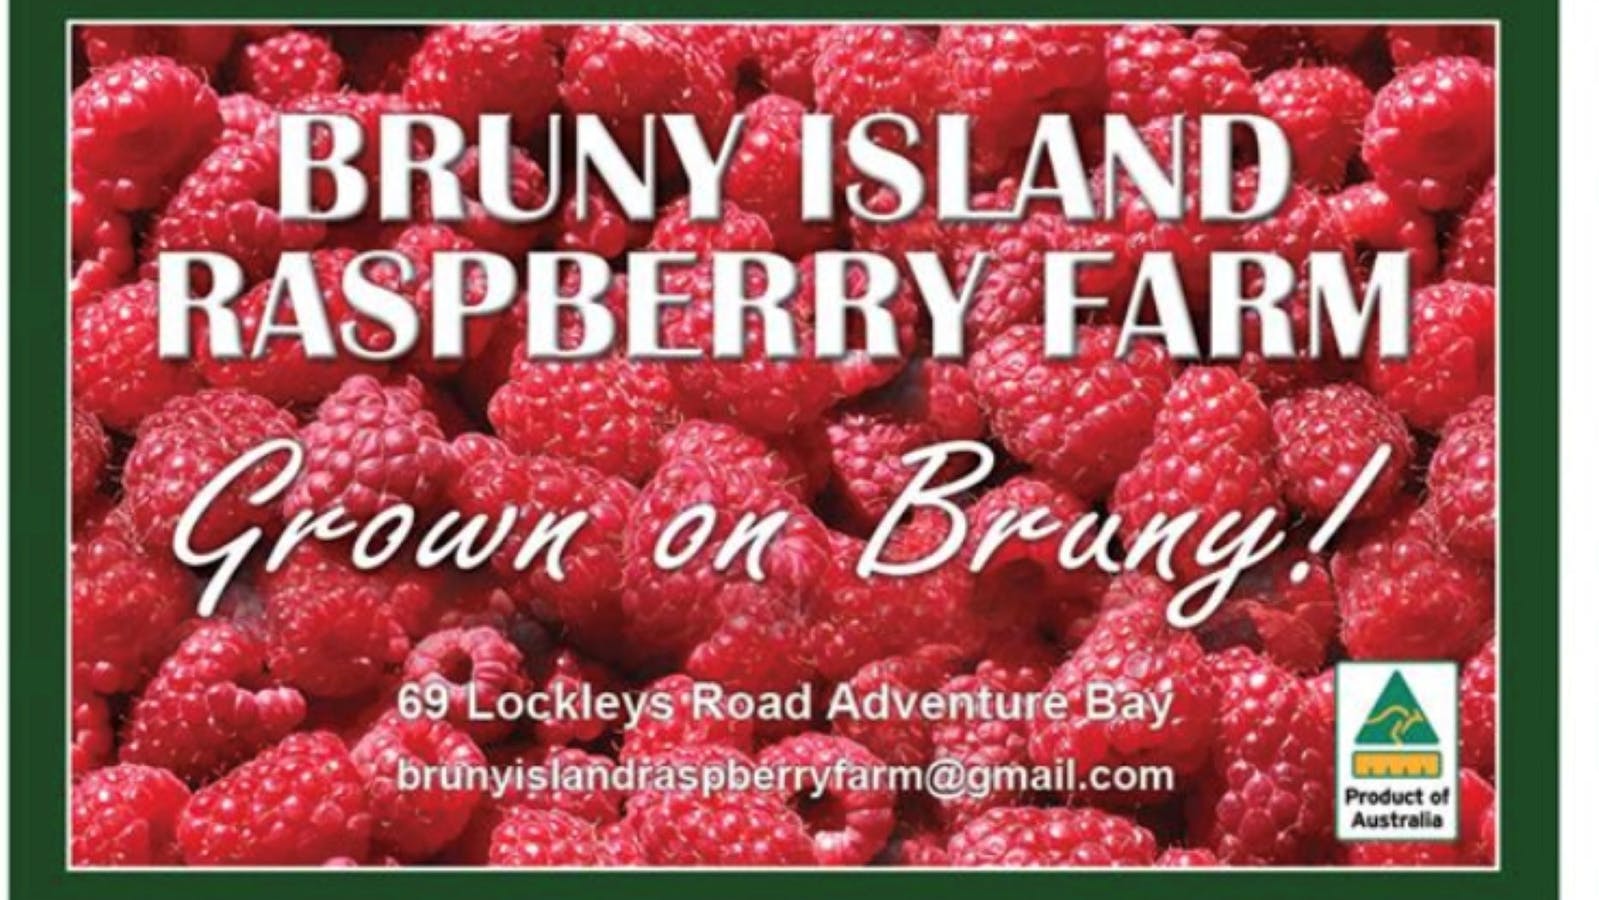 Bruny Island Raspberry Farm